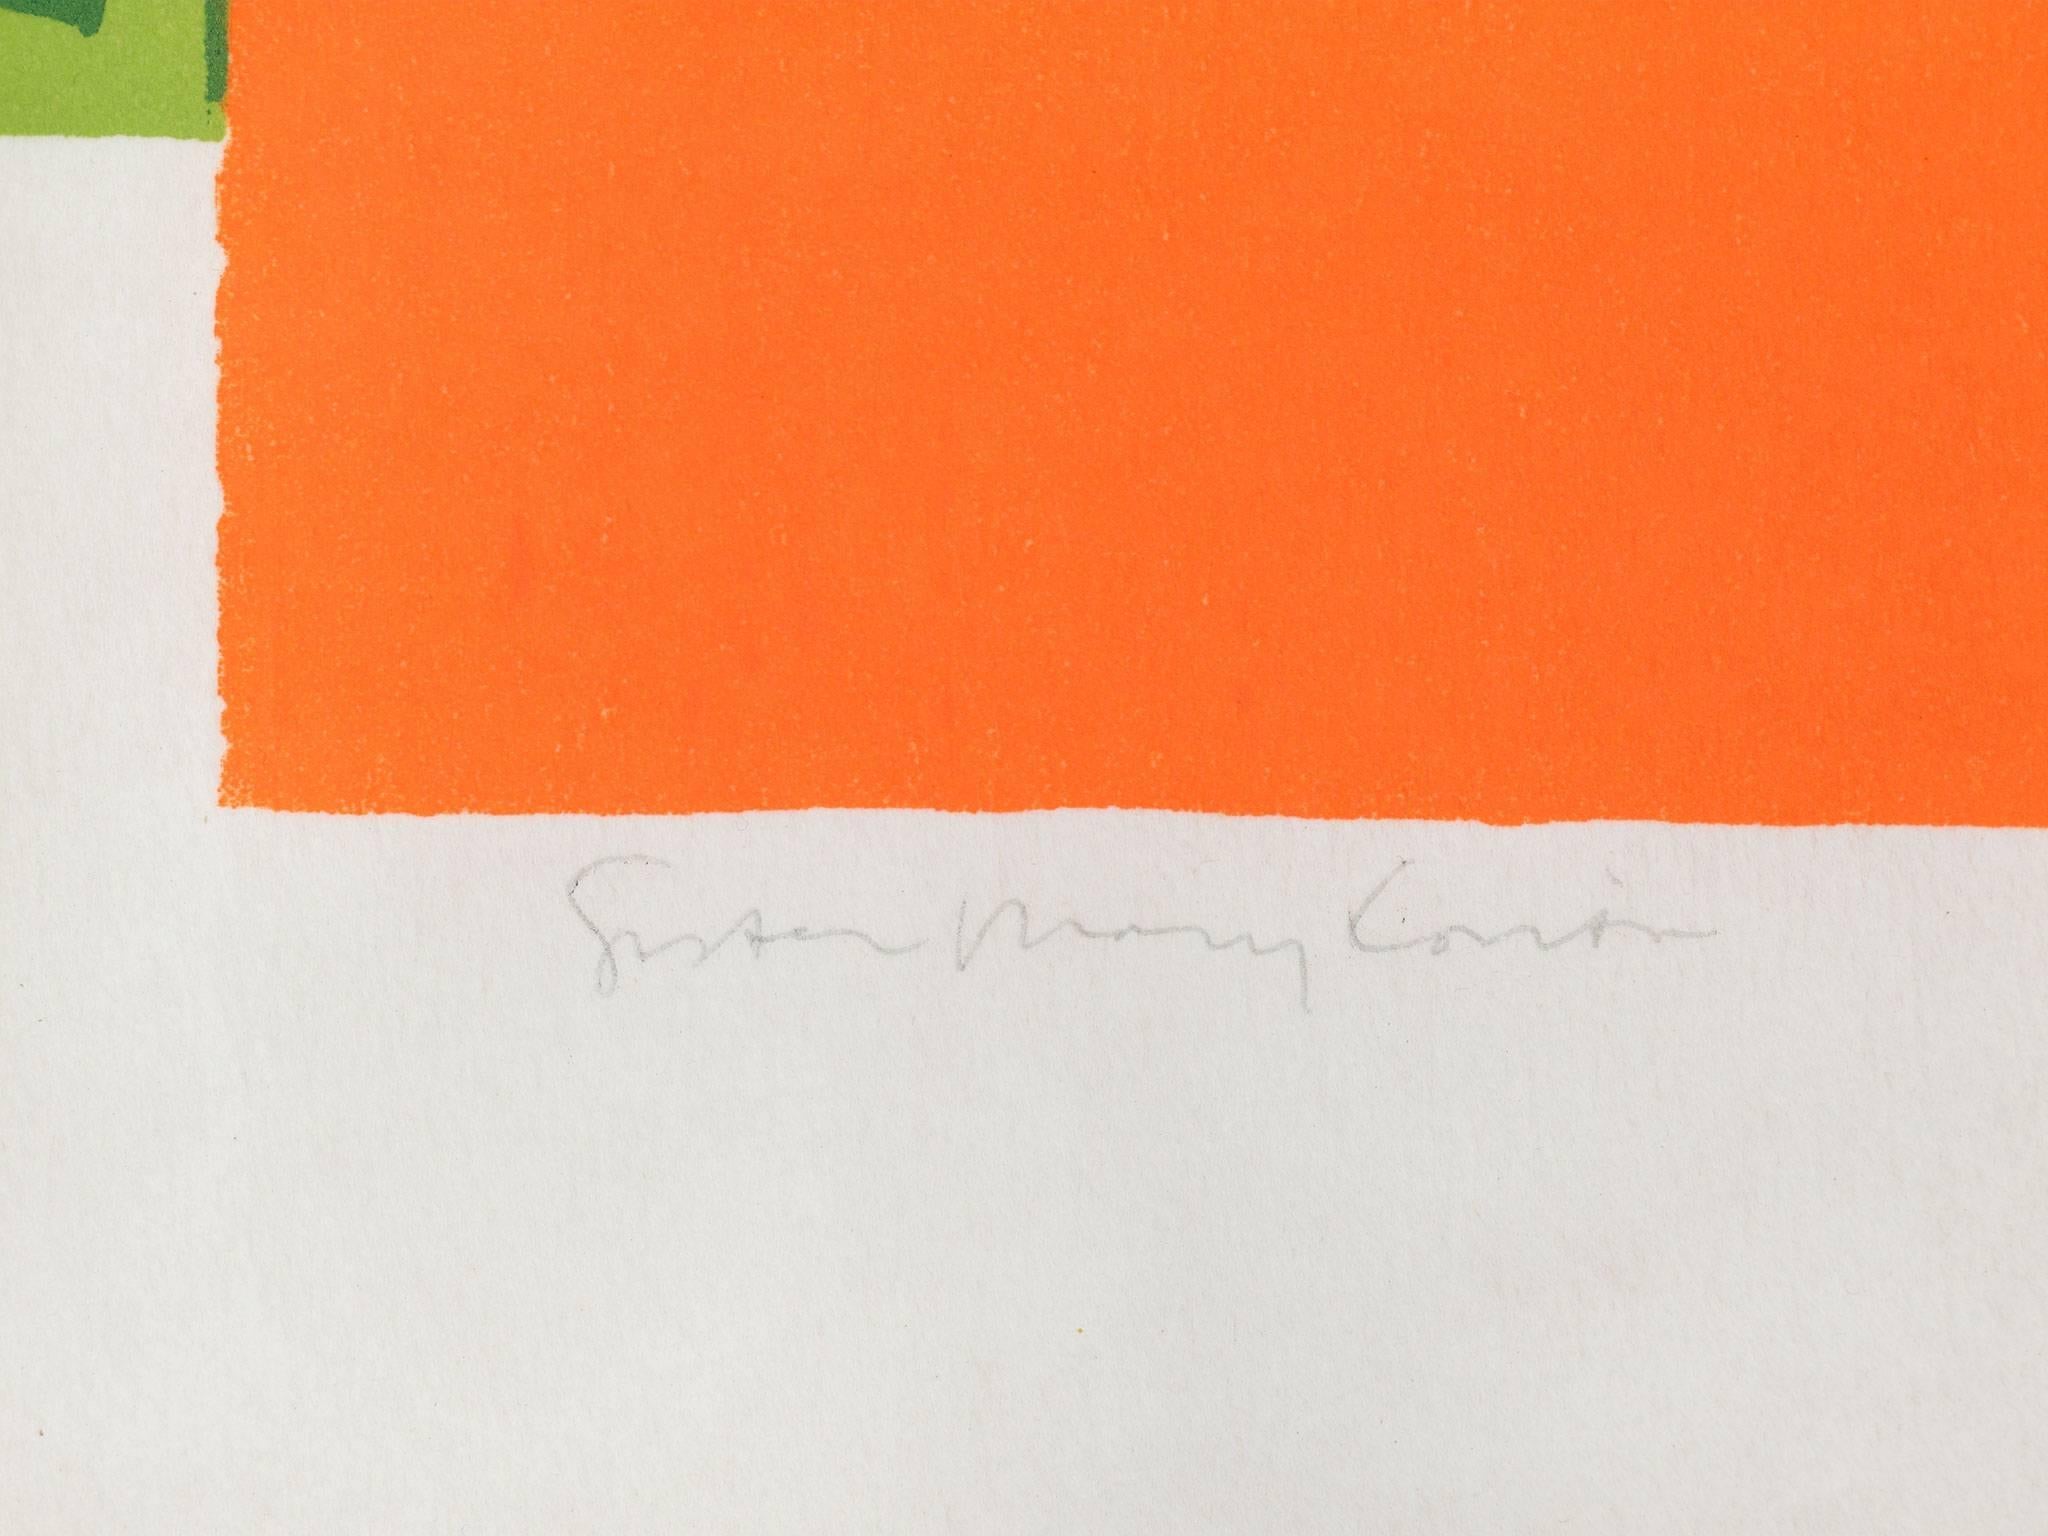 American Sister Mary Corita Kent 'green up', 1966, Signed Serigraph